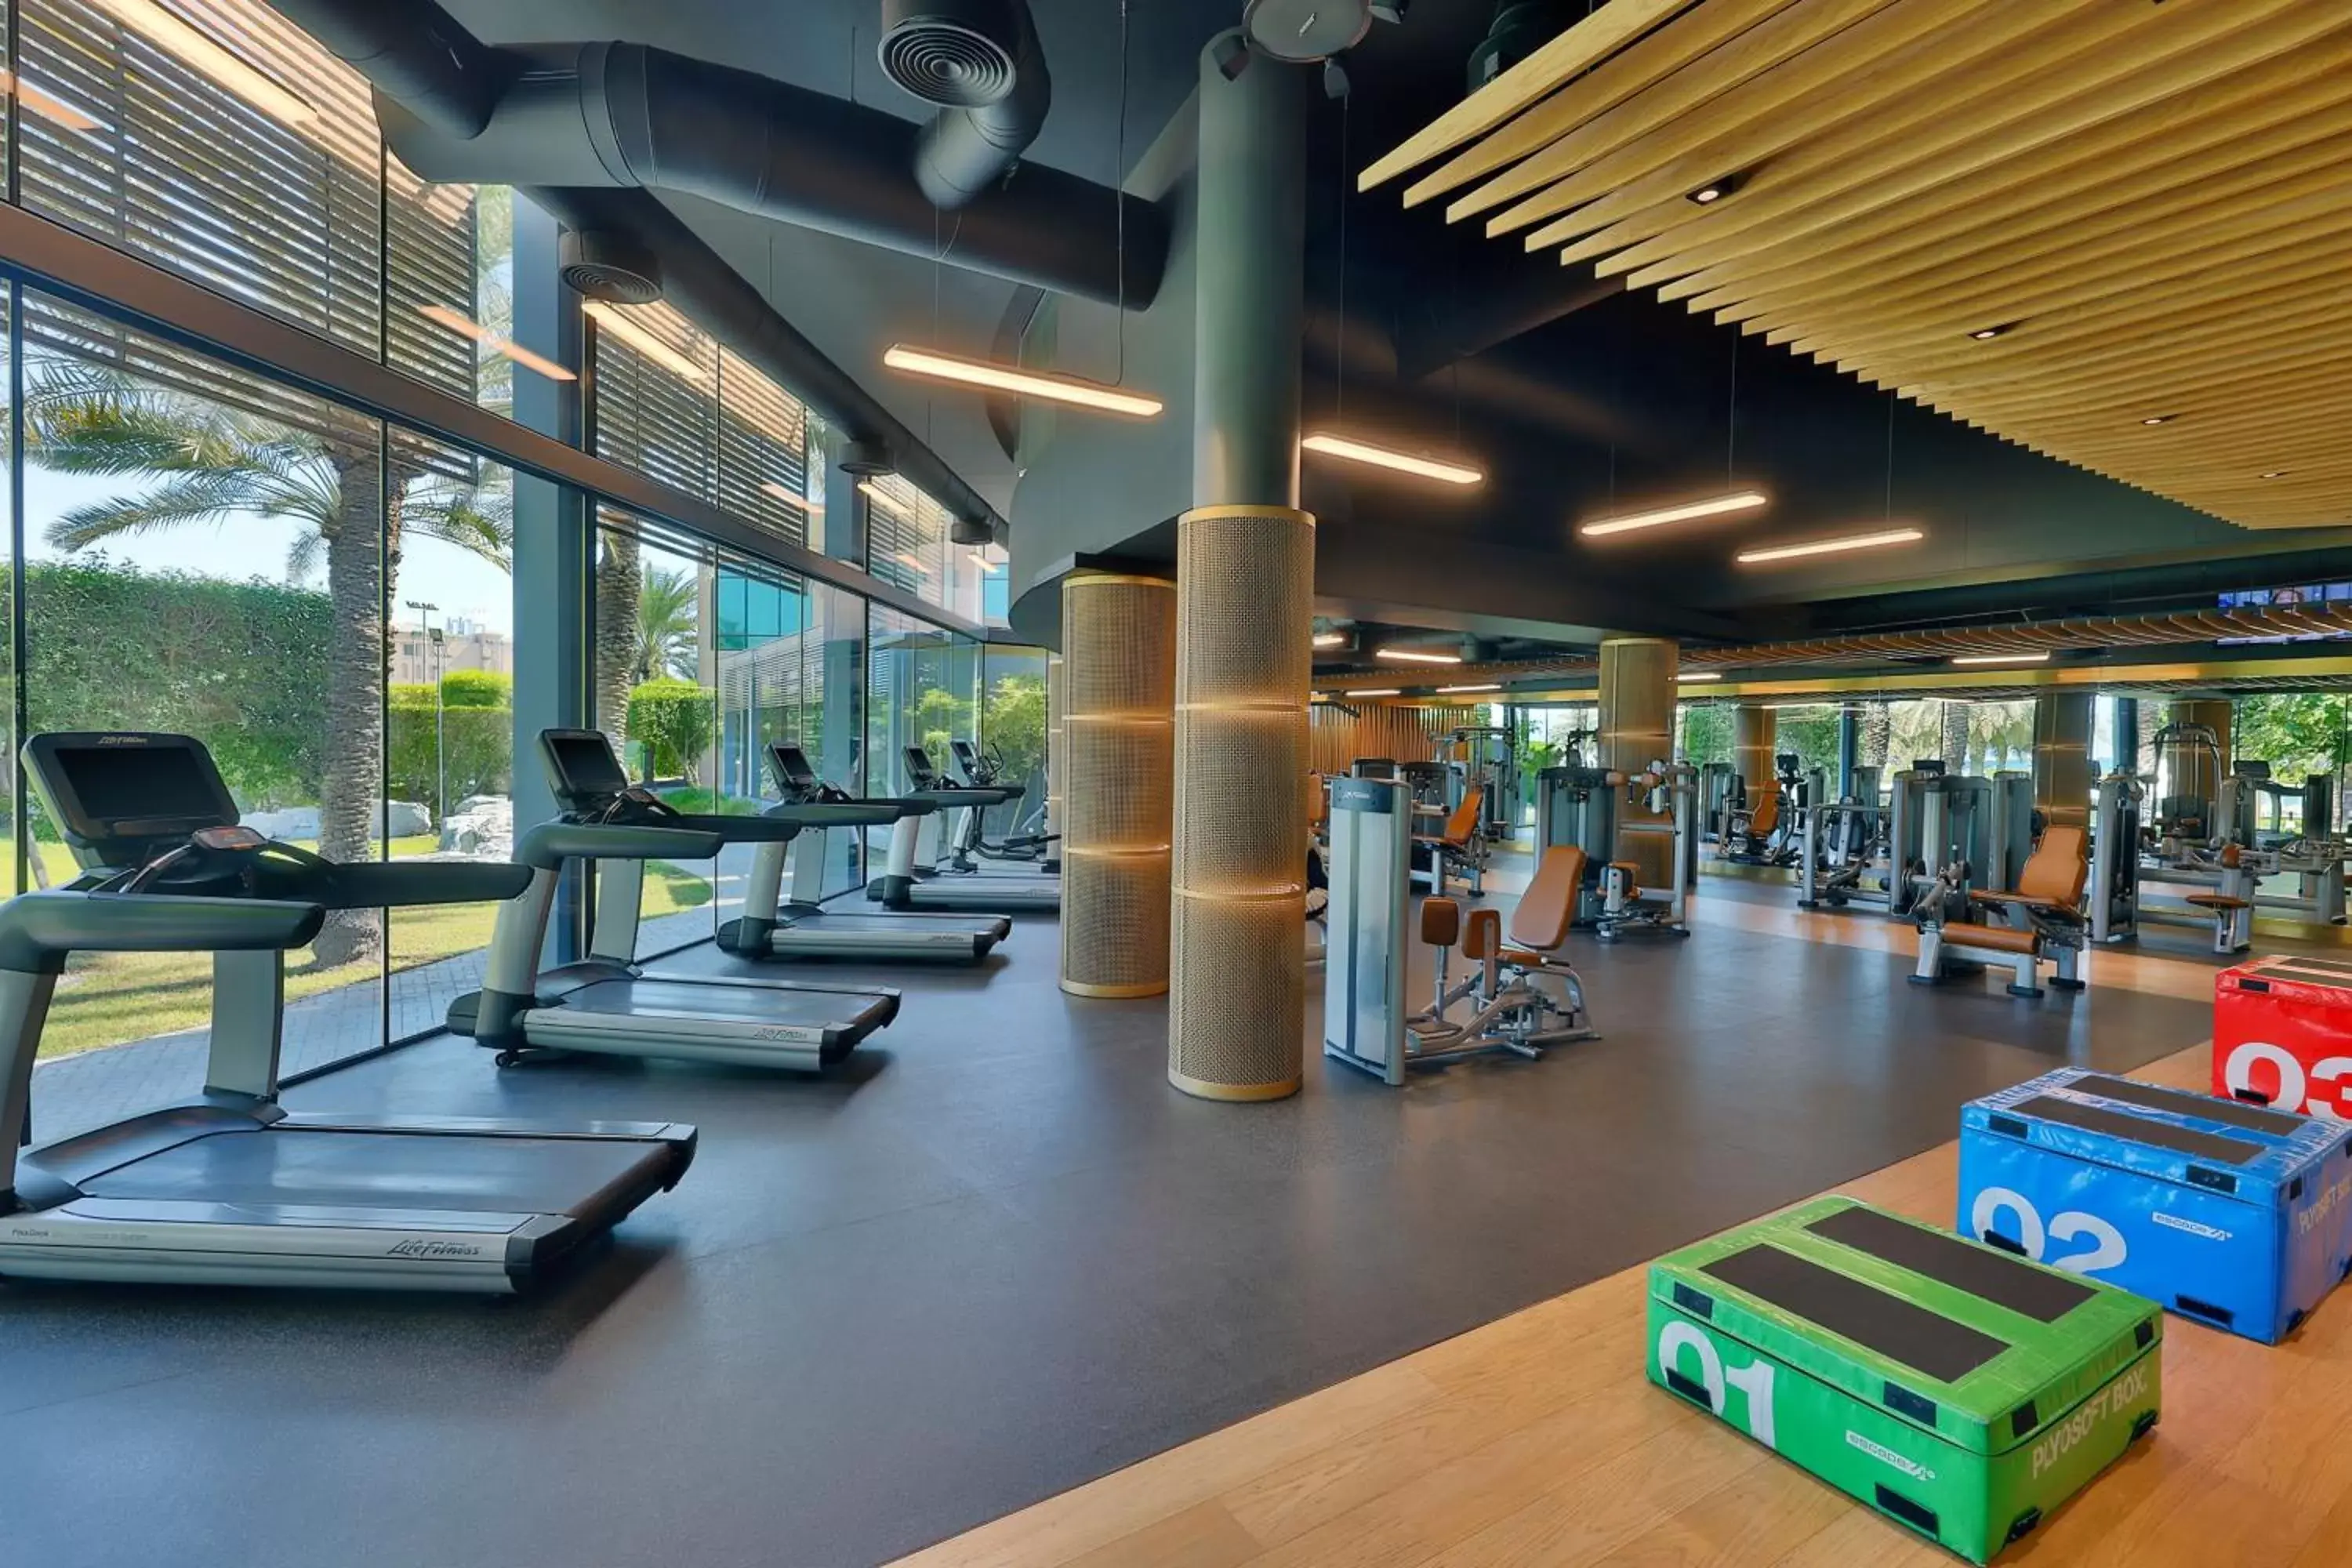 Fitness centre/facilities, Fitness Center/Facilities in The Ritz-Carlton, Bahrain